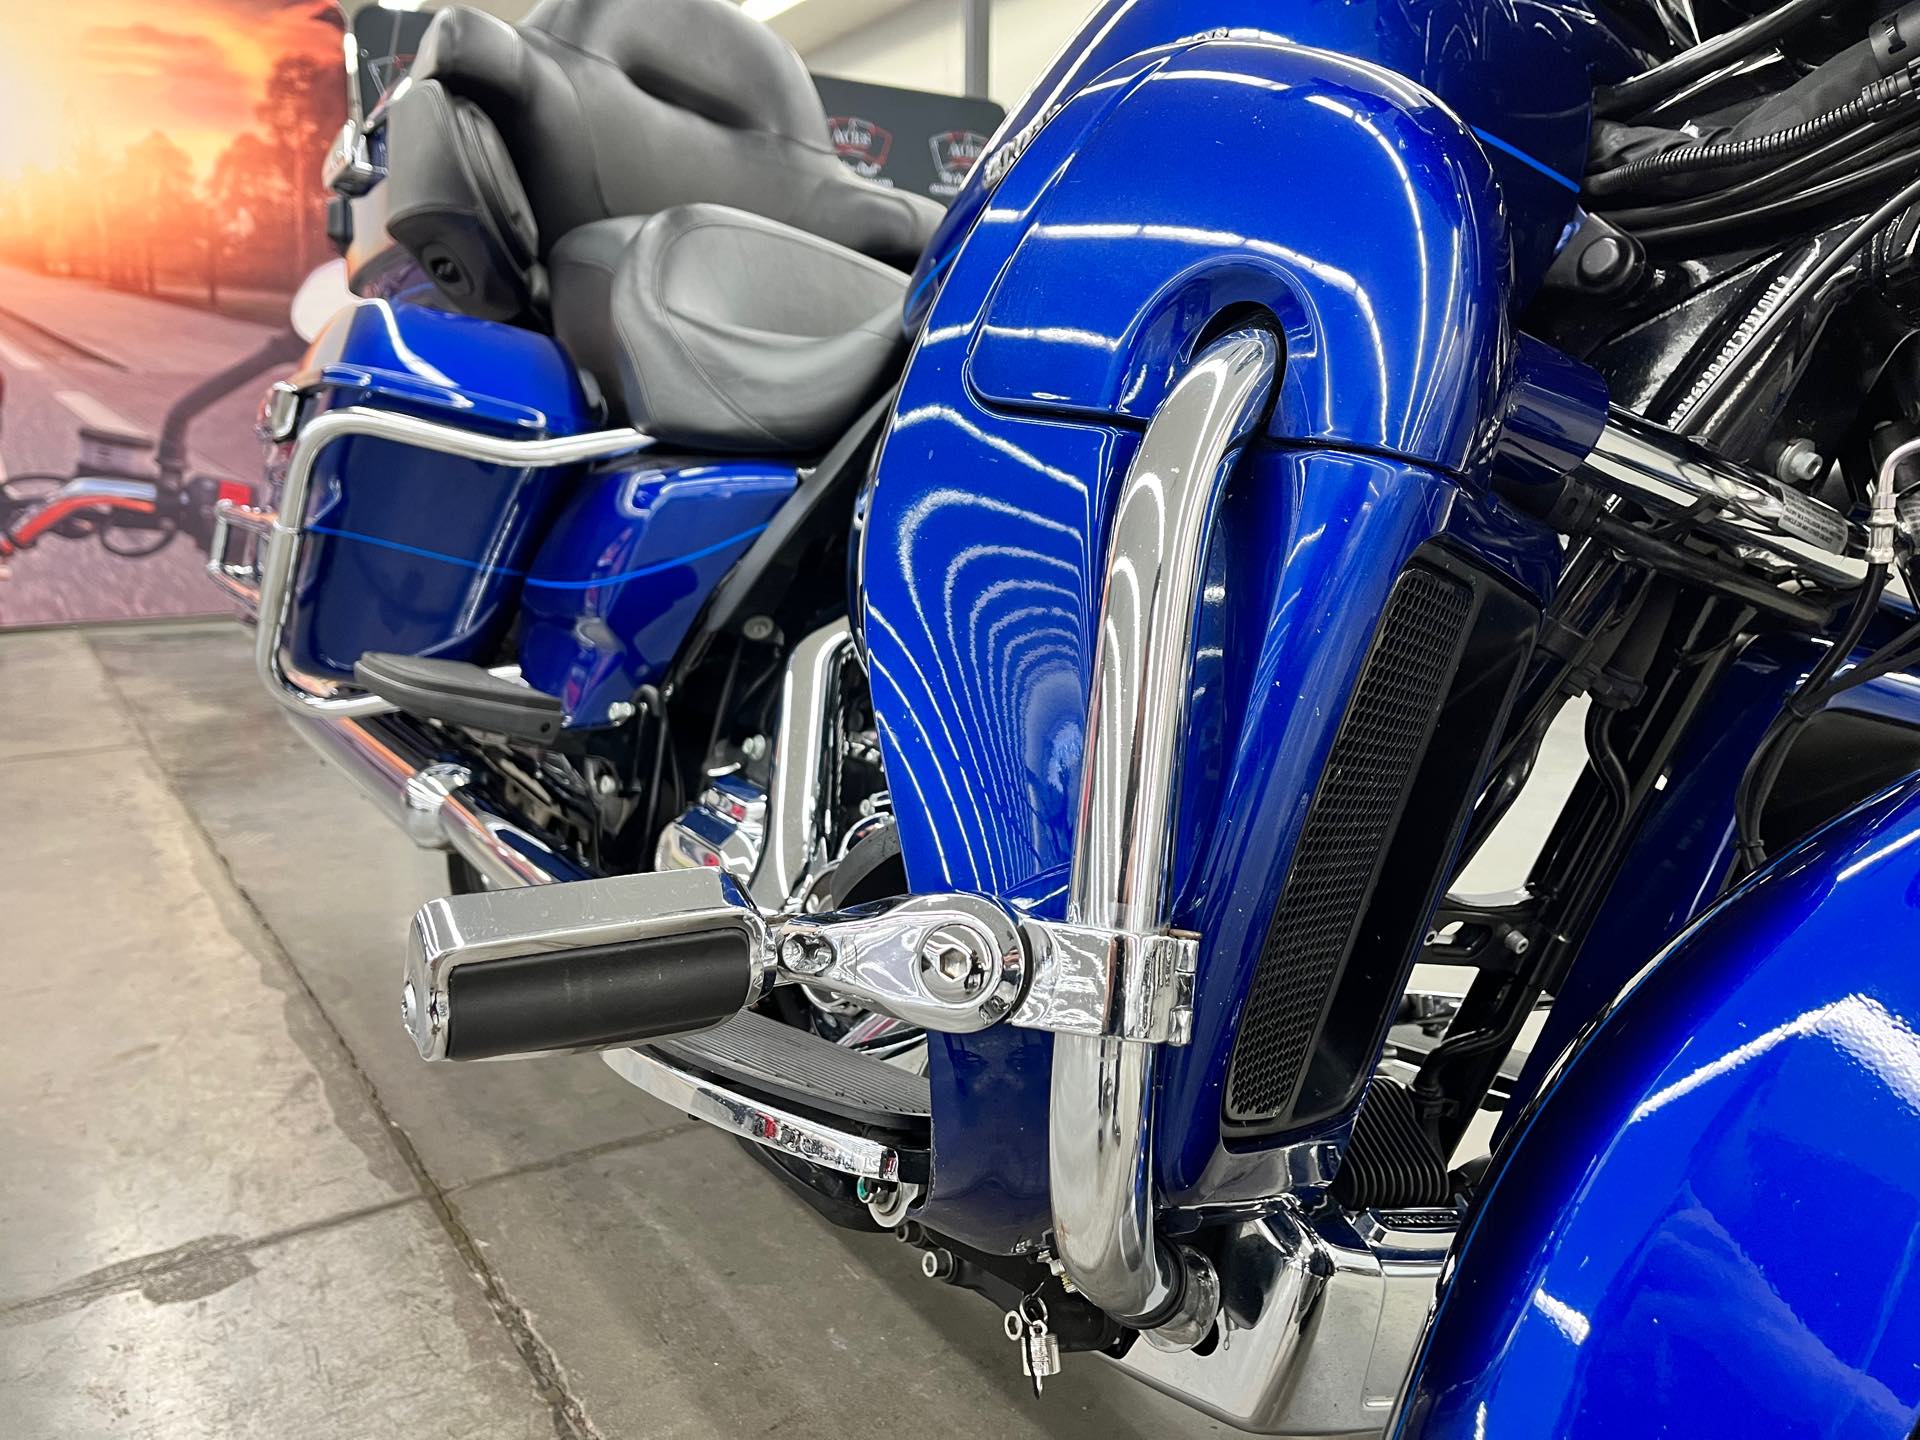 2015 Harley-Davidson Electra Glide Ultra Limited at Aces Motorcycles - Denver